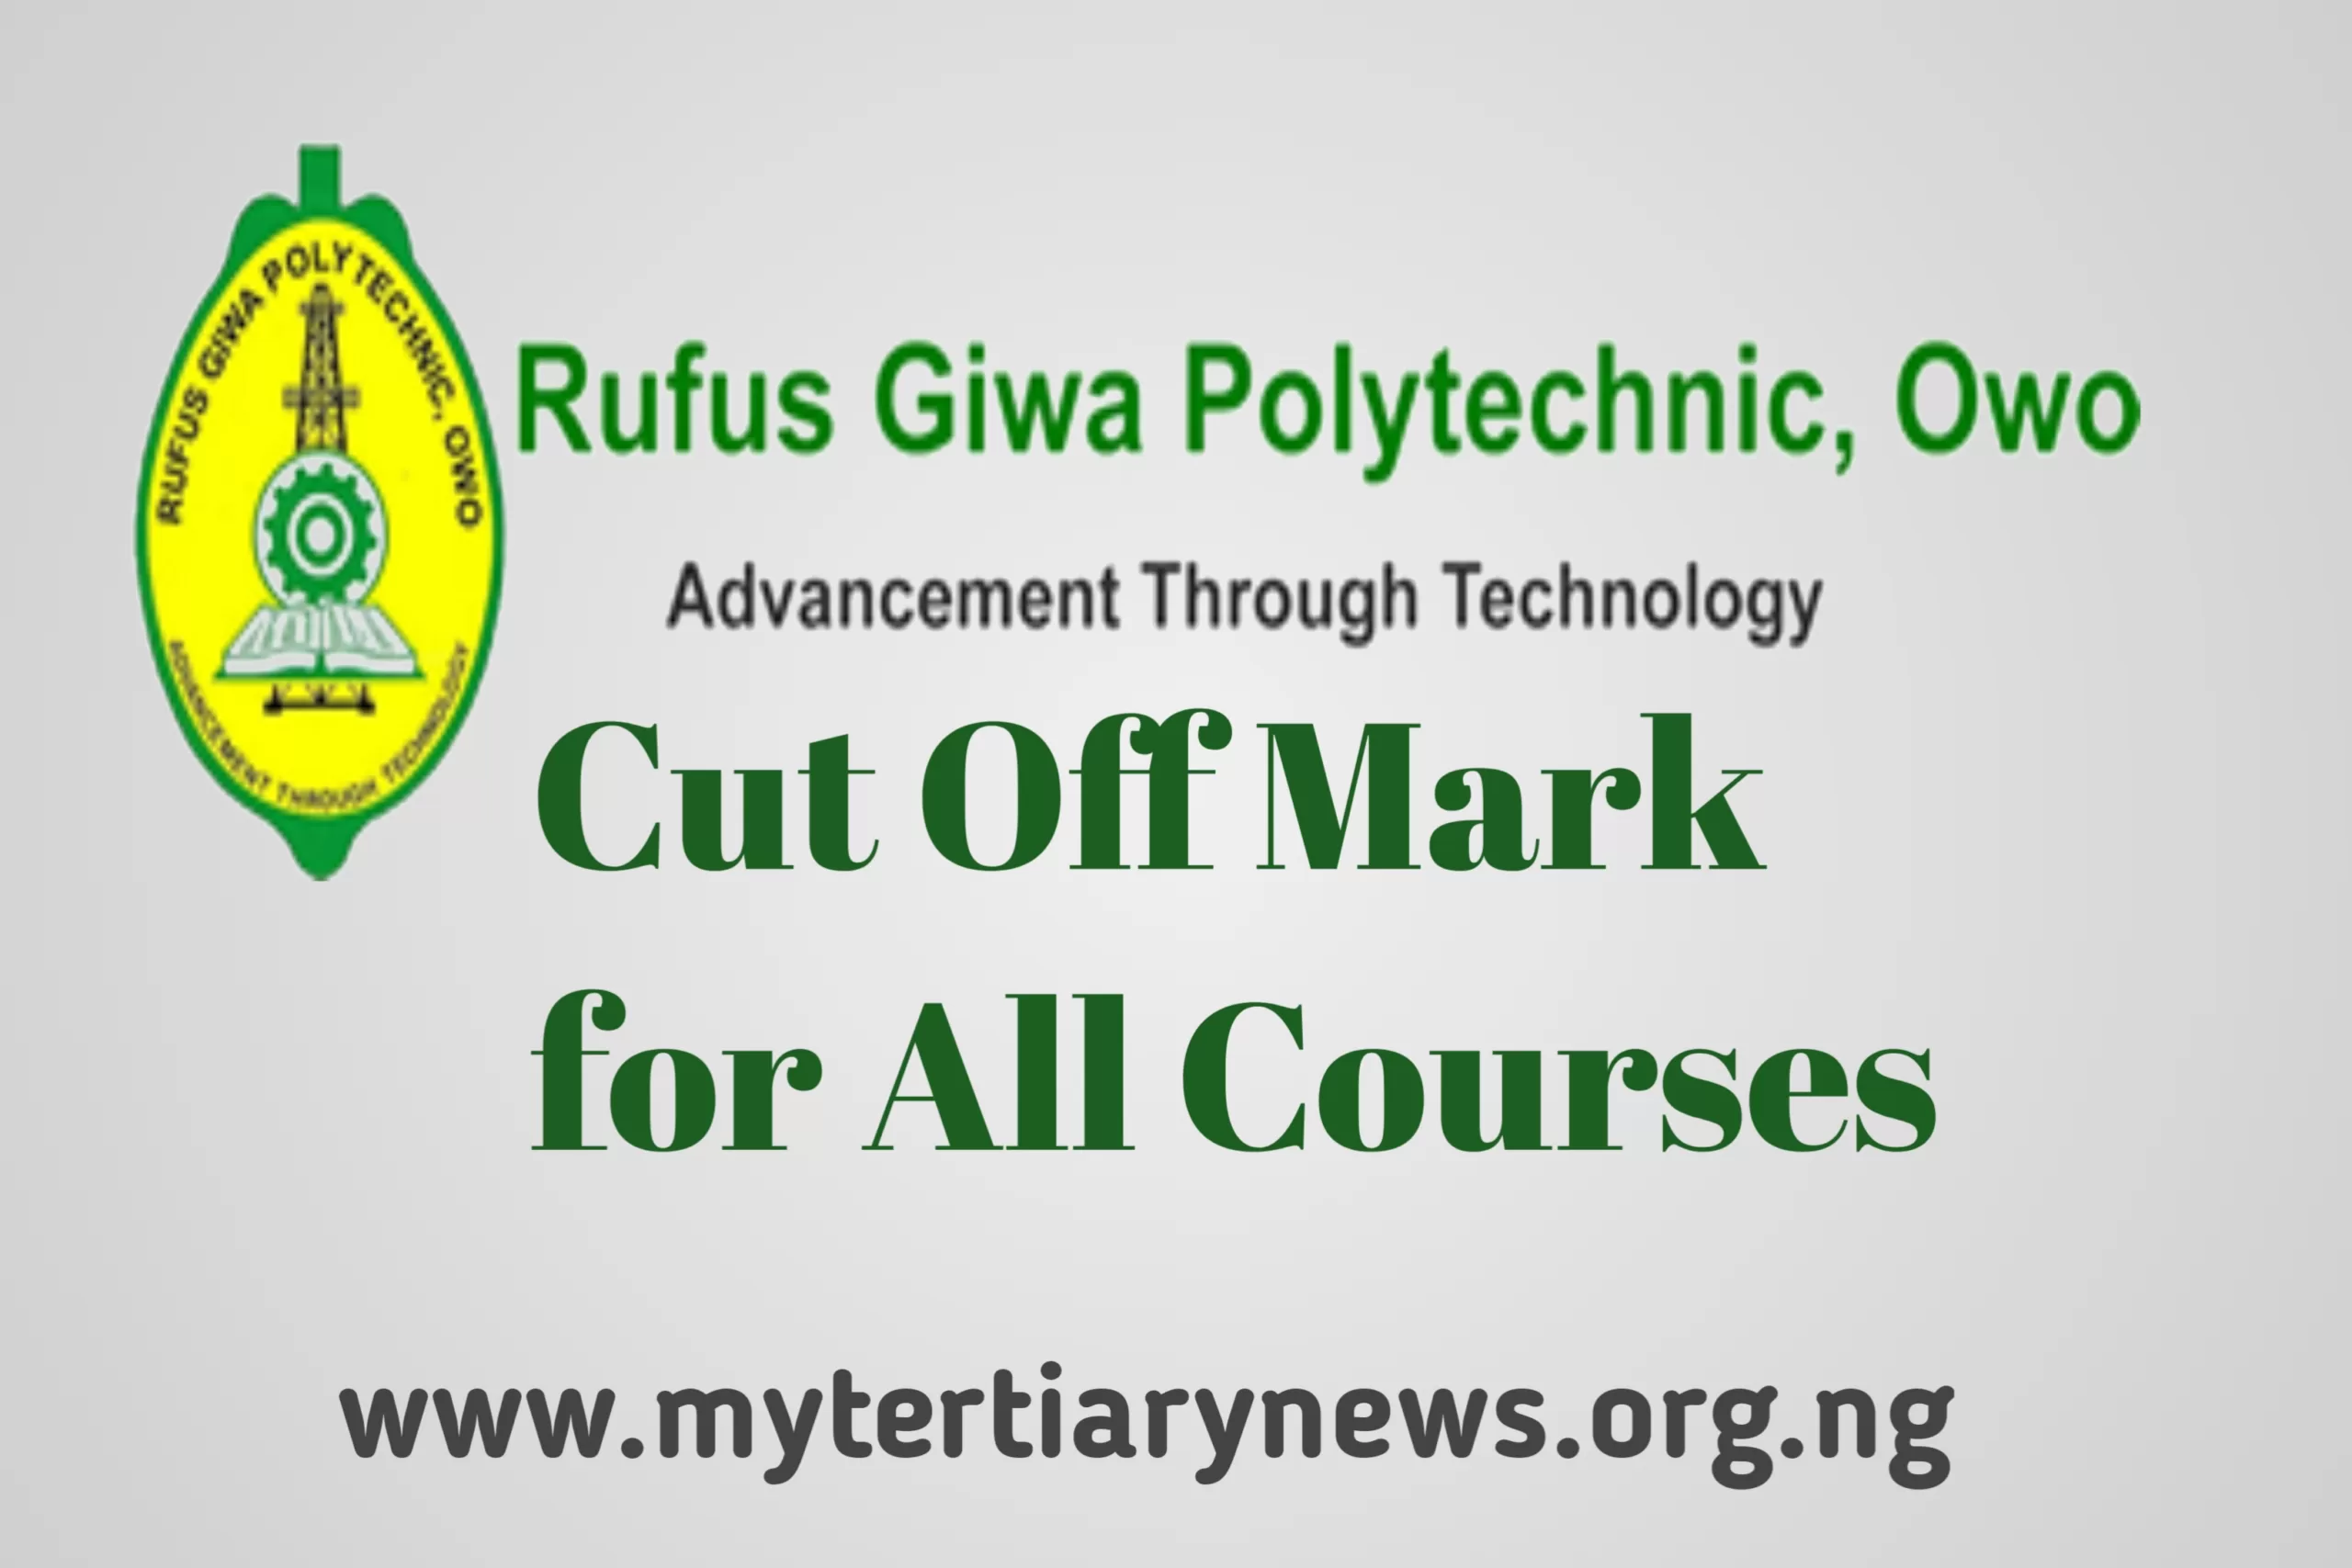 Rufus Giwa Polytechnic Image || Rufus Giwa Polytechnic Cut Off Mark for All Courses